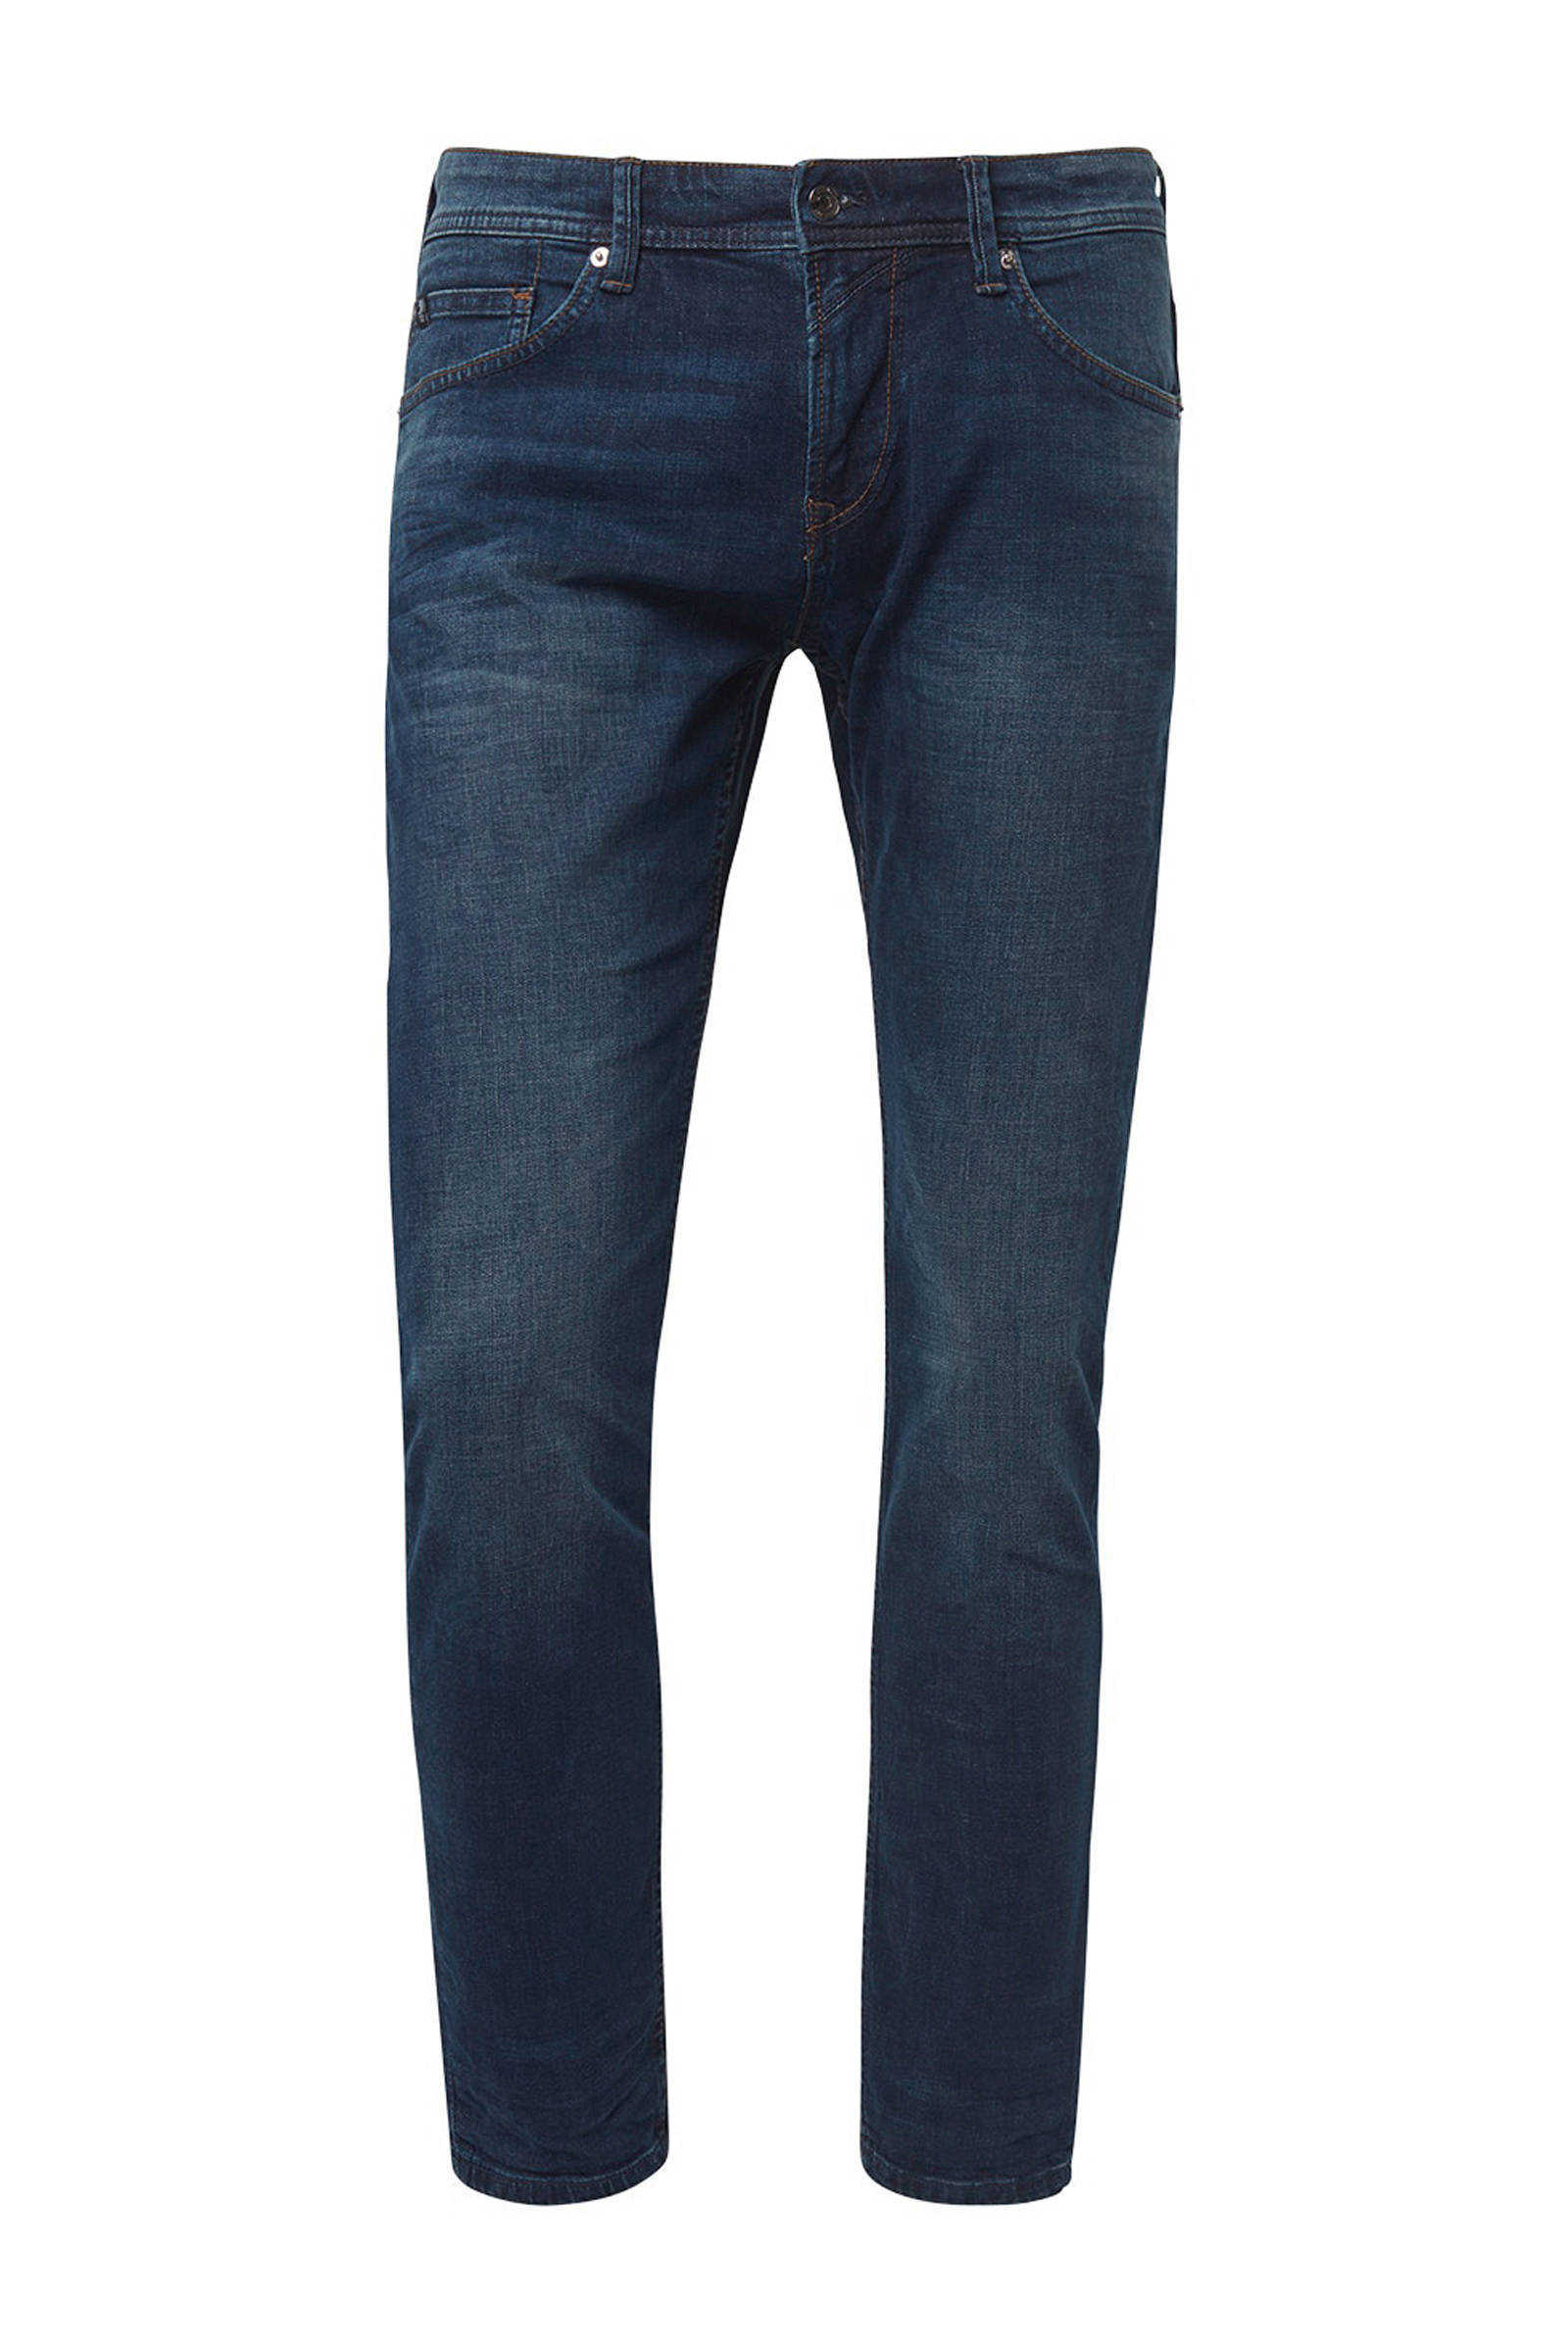 Tom Tailor slim fit jeans Piers dark stone wash denim online kopen